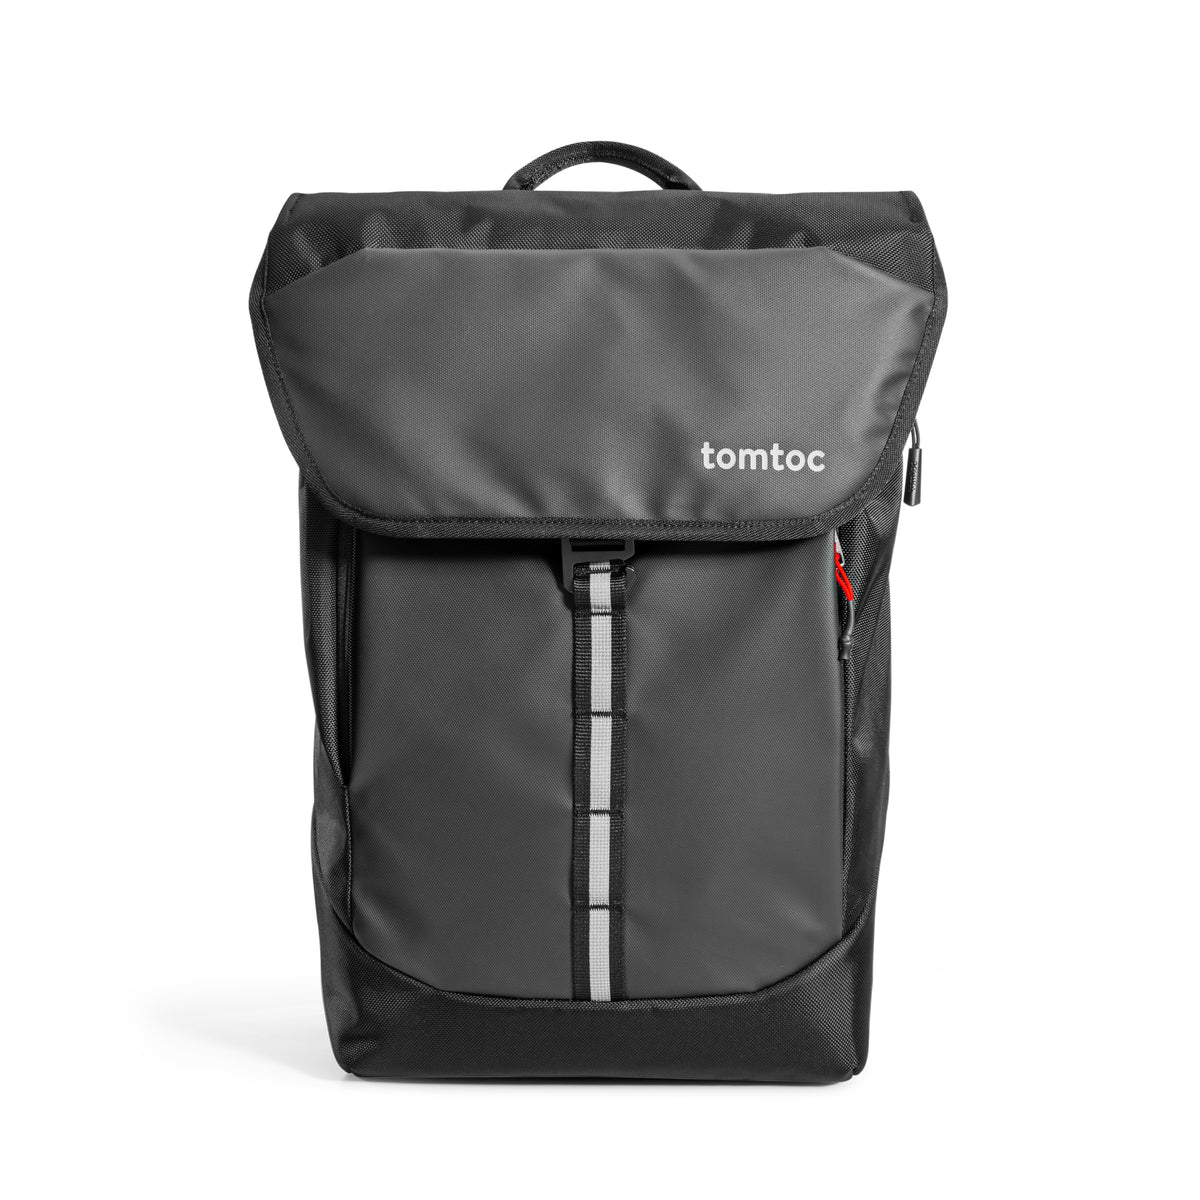 tomtoc 16 Inch Flap Laptop Backpack / Laptop Bag - Black